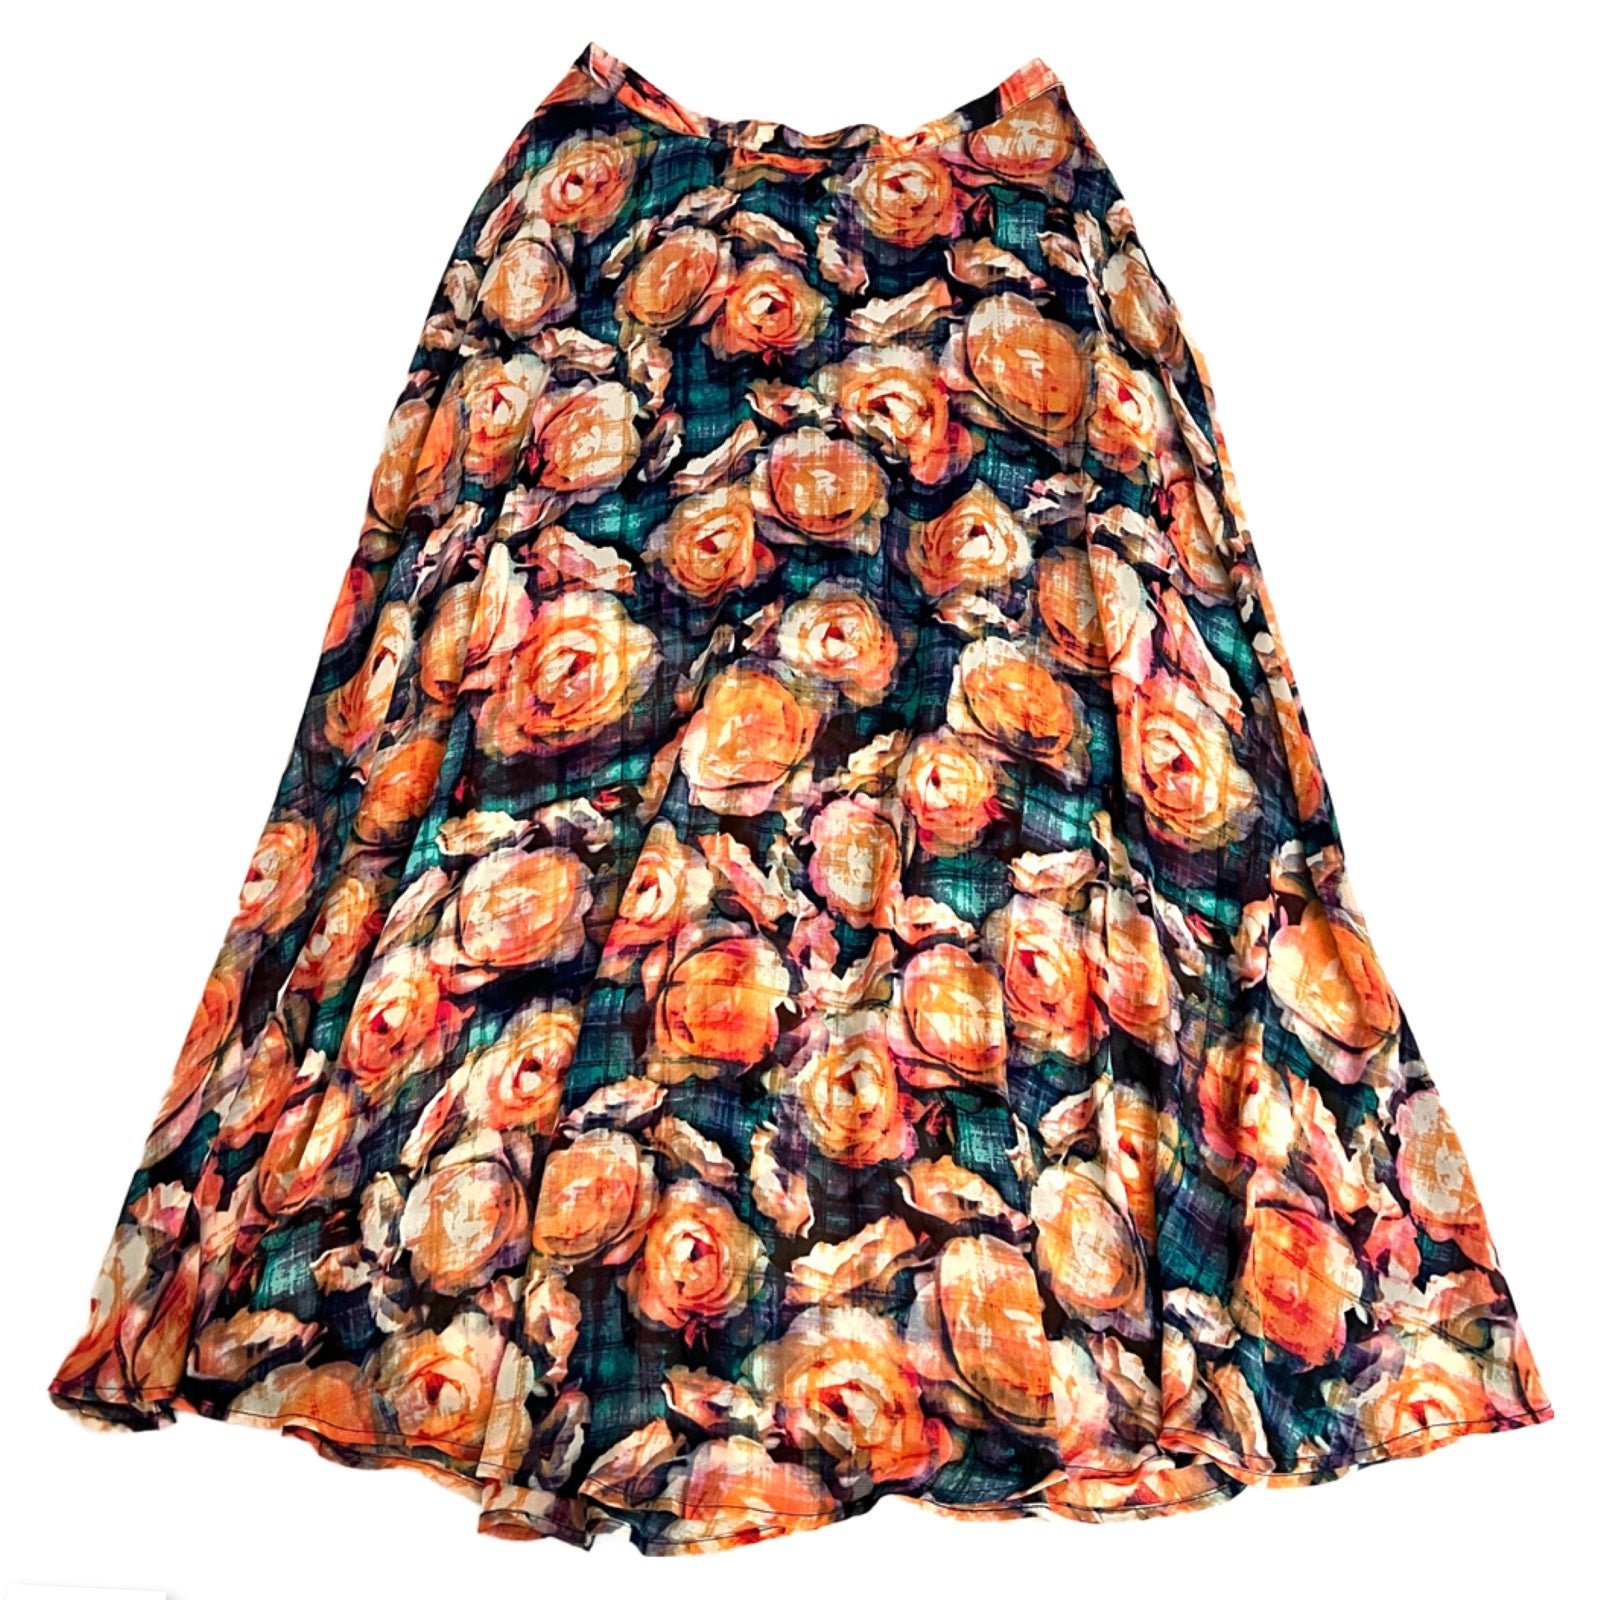 Great DECREE Floral Print Maxi Skirt with Side Slit / Side Hem Medium nyJeqTHrE Great